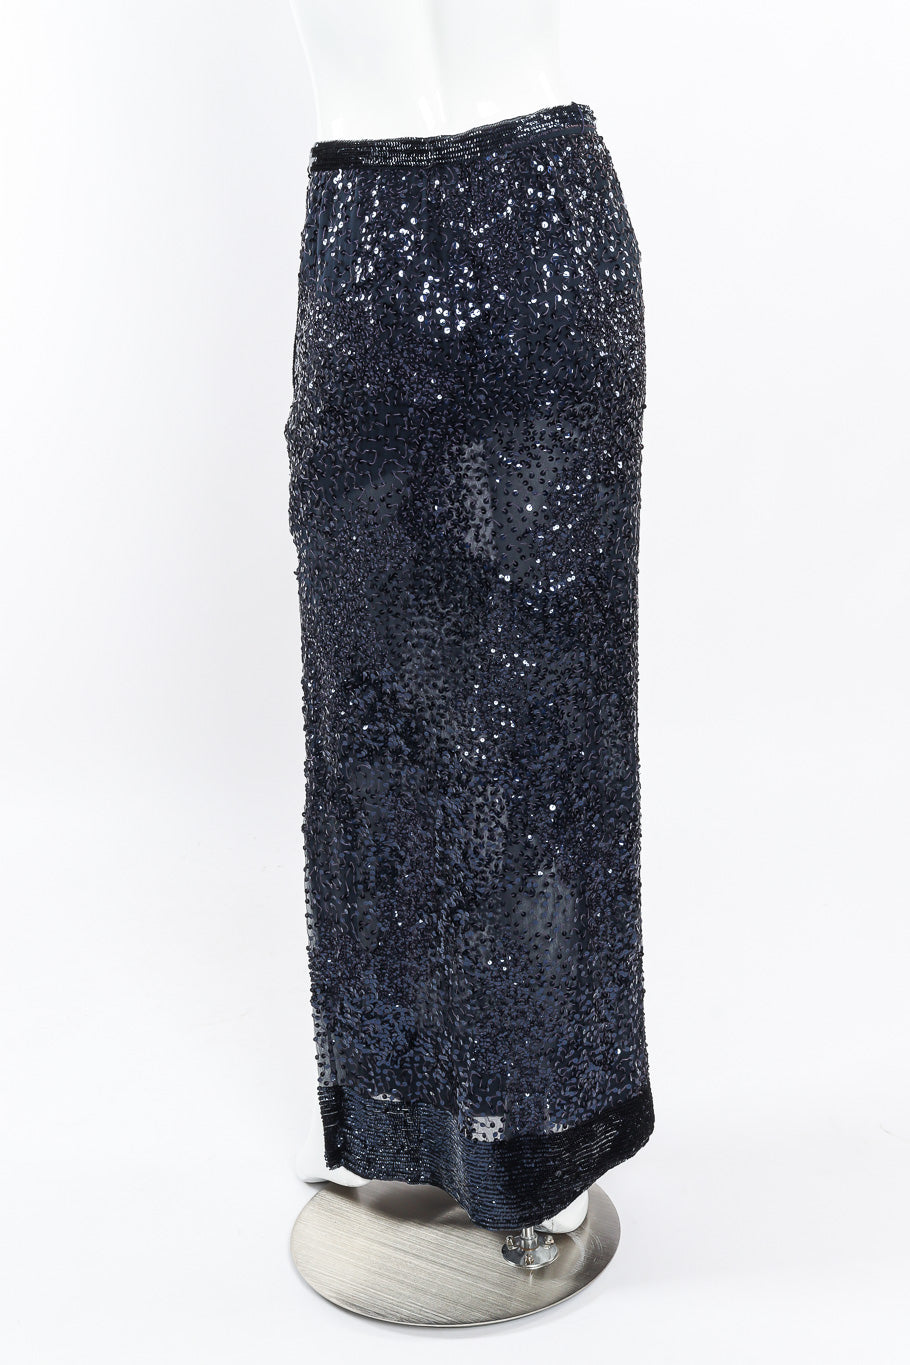 Midnight sequin skirt by Gianfranco Ferre on mannequin back @recessla